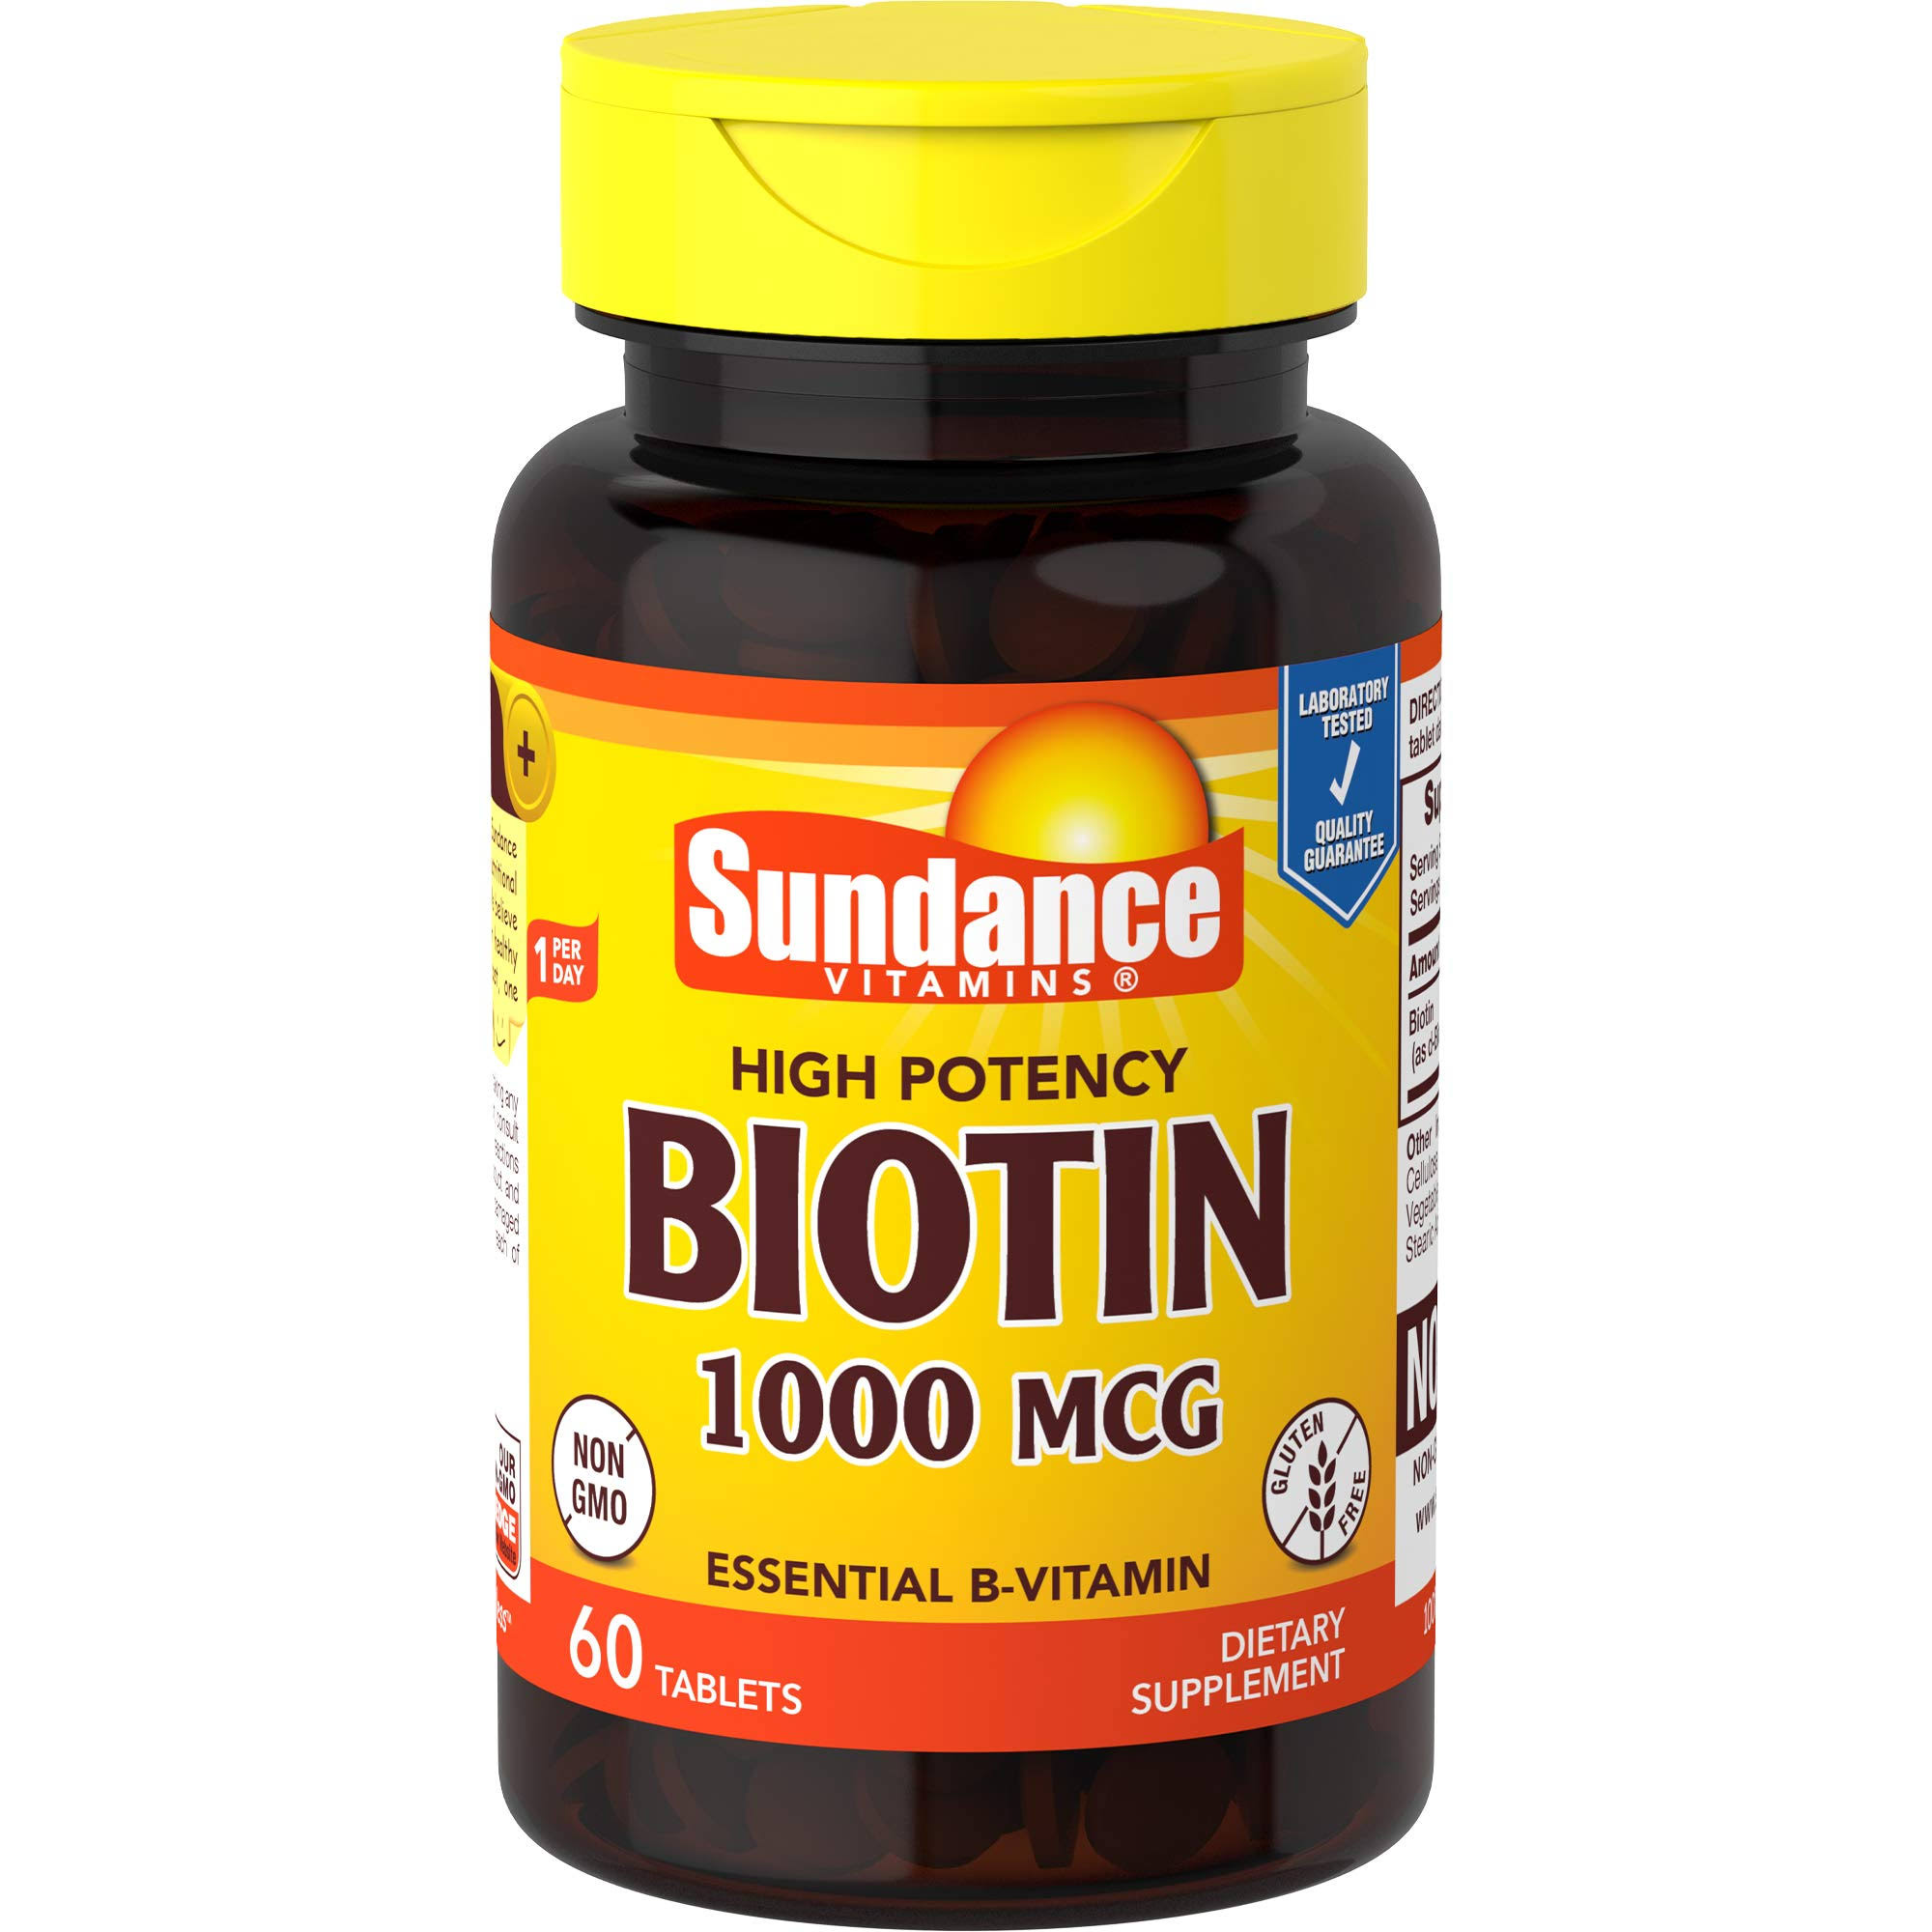 Sundance Biotin 1000 MCG Supplement - 60 Tablets